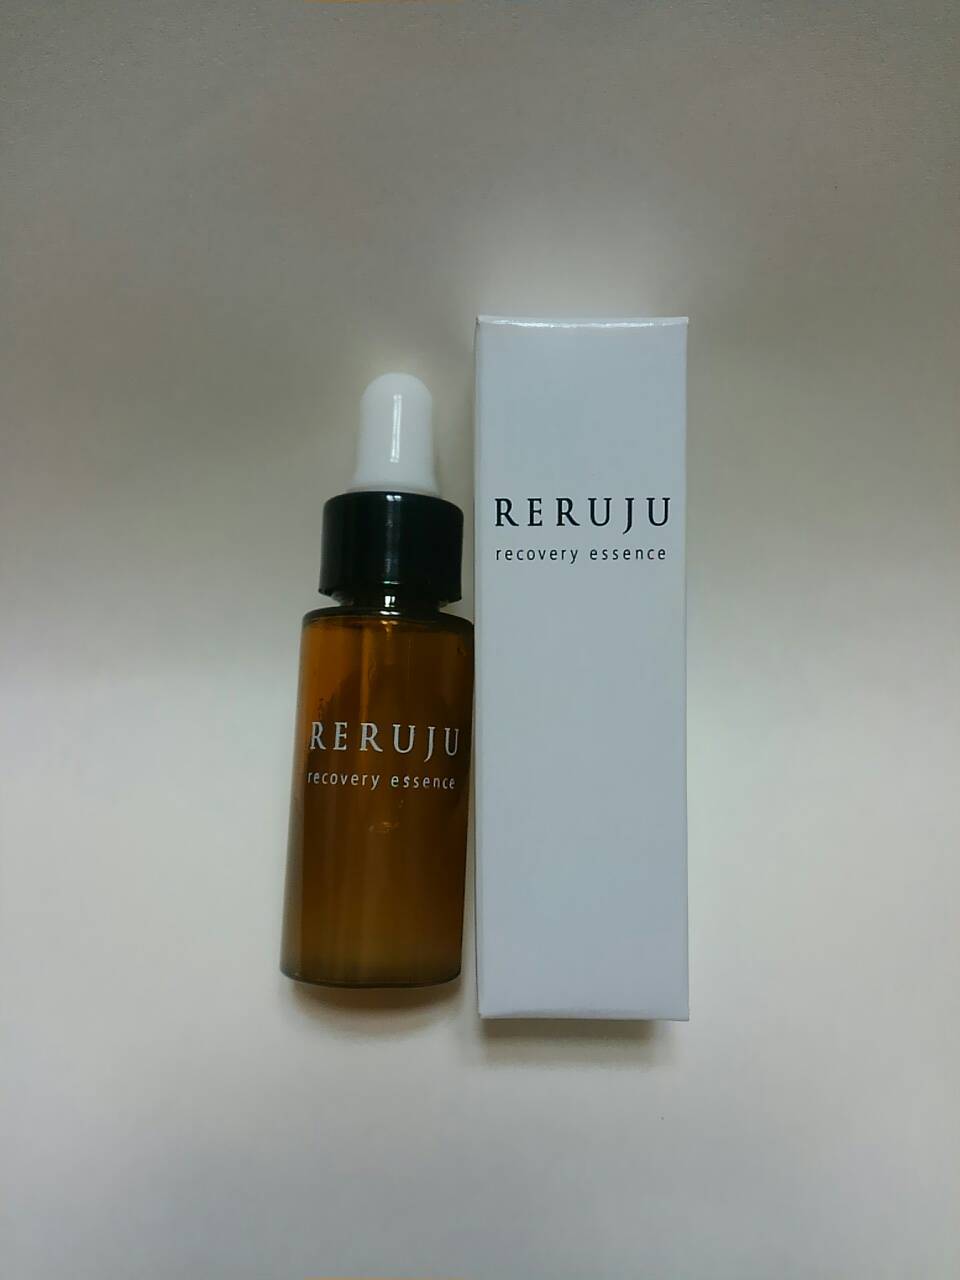 RERUJU(リルジュ) / リルジュ リカバリィエッセンスの公式商品